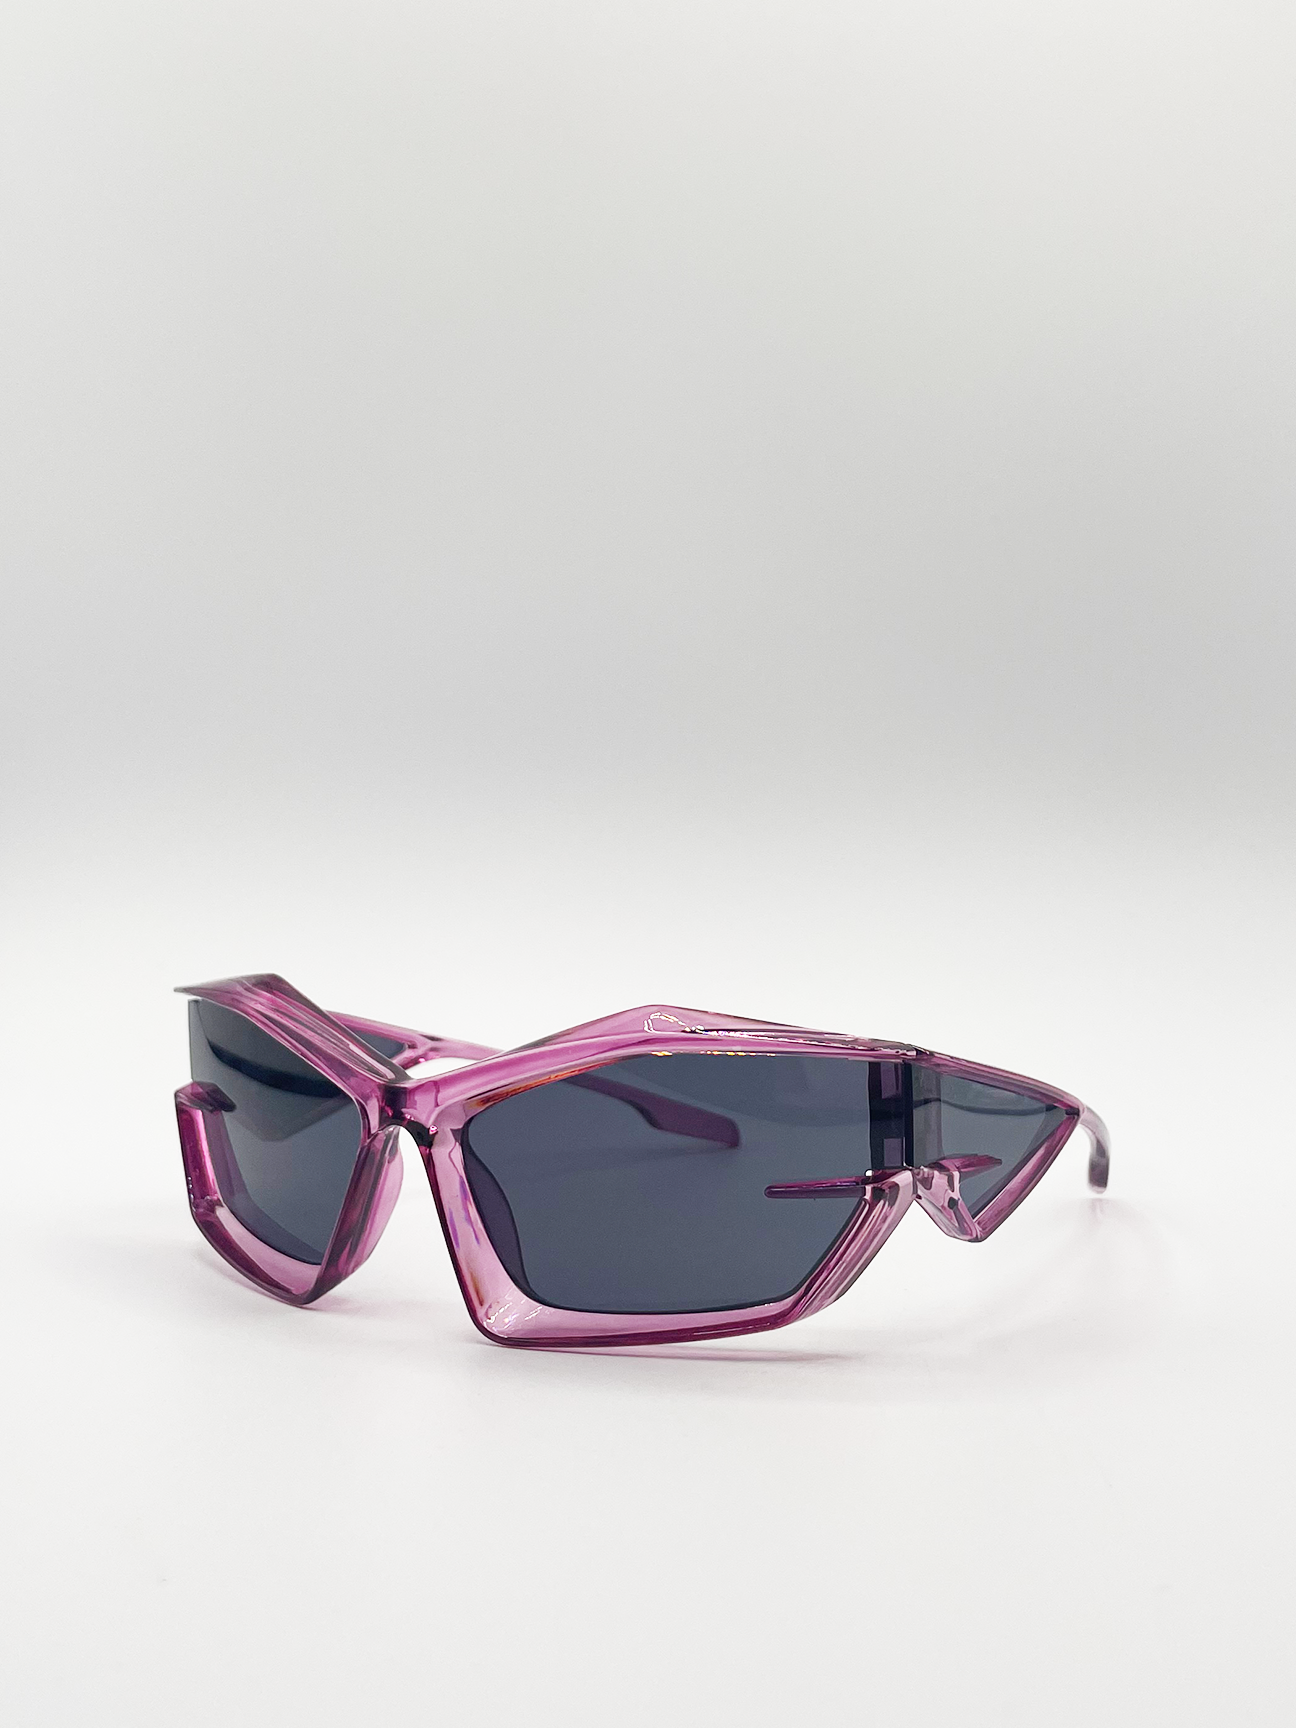 Racer style sunglasses in purple